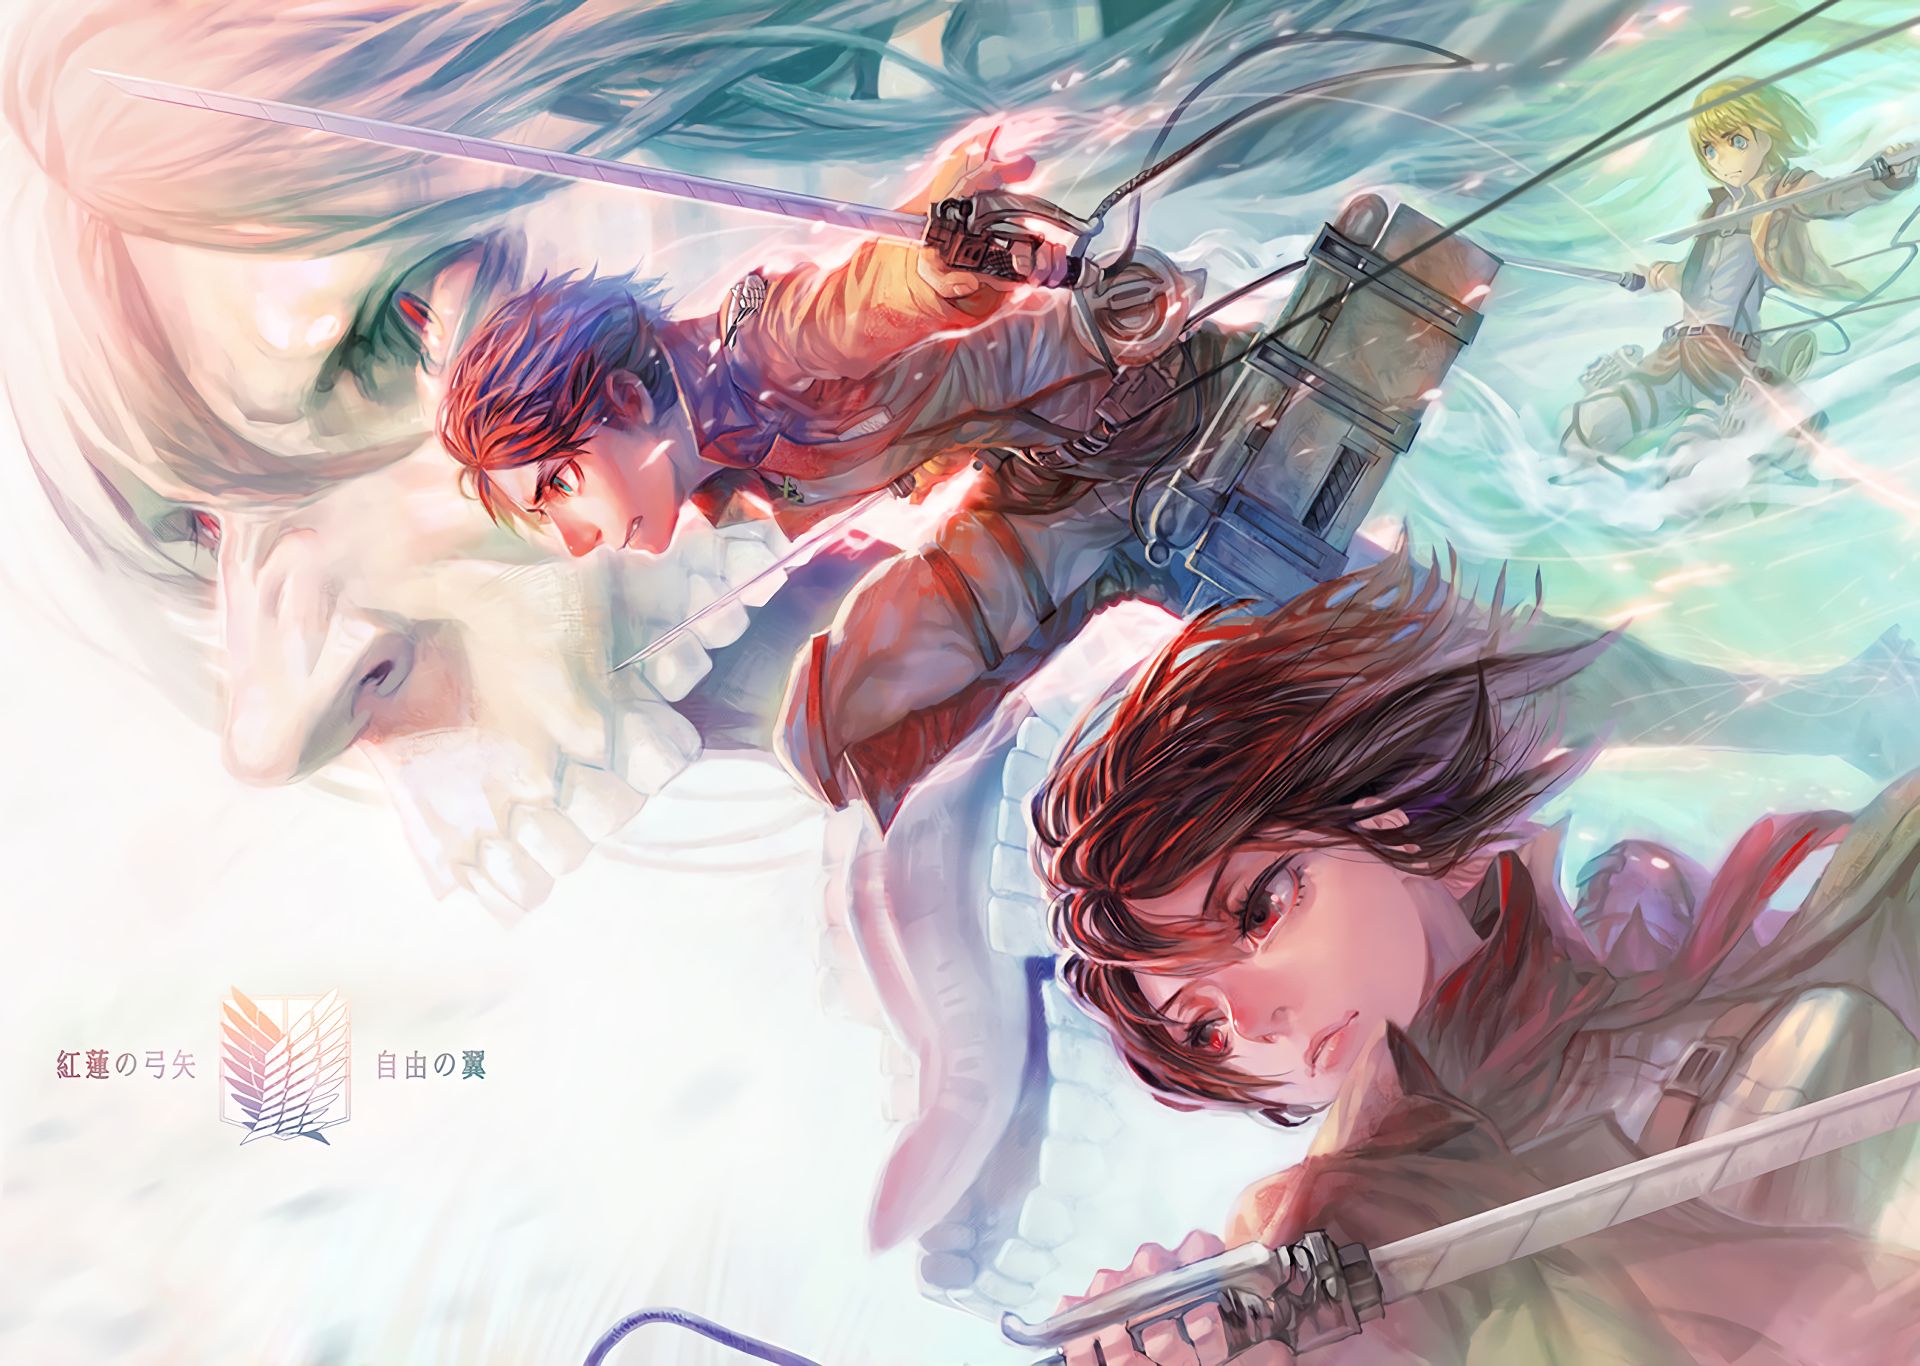 Mikasa Ackerman, Eren Yeager and Armin Arlert 720x1560 Resolution Wallpaper, HD Anime 4K Wallpaper, Image, Photo and Background